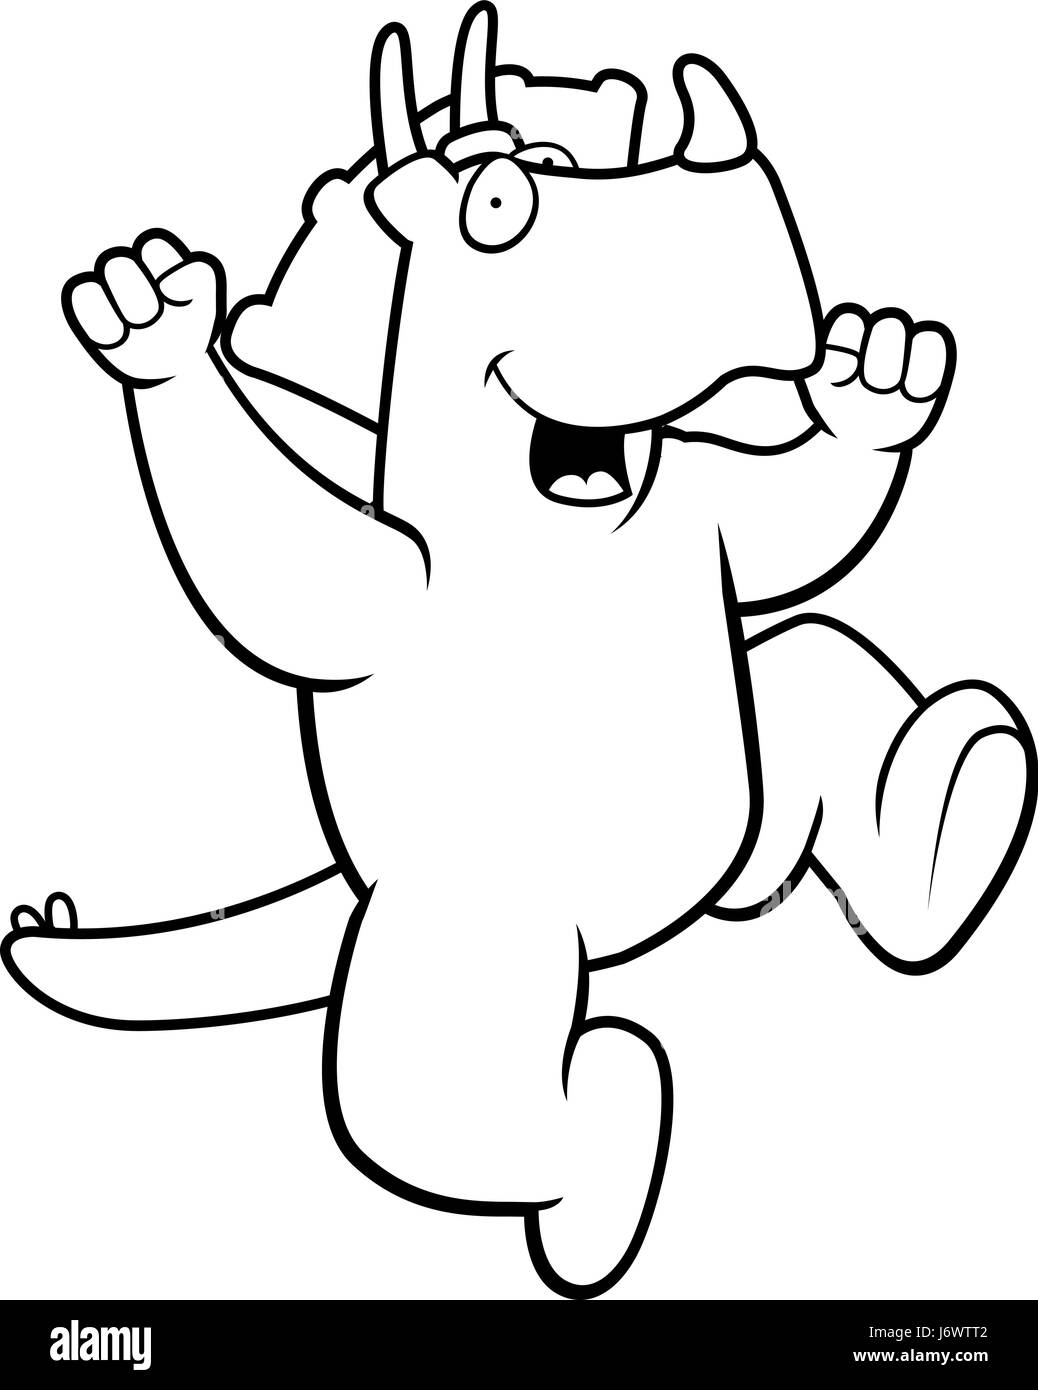 A happy cartoon dinosaur jumping and smiling. Stock Vector